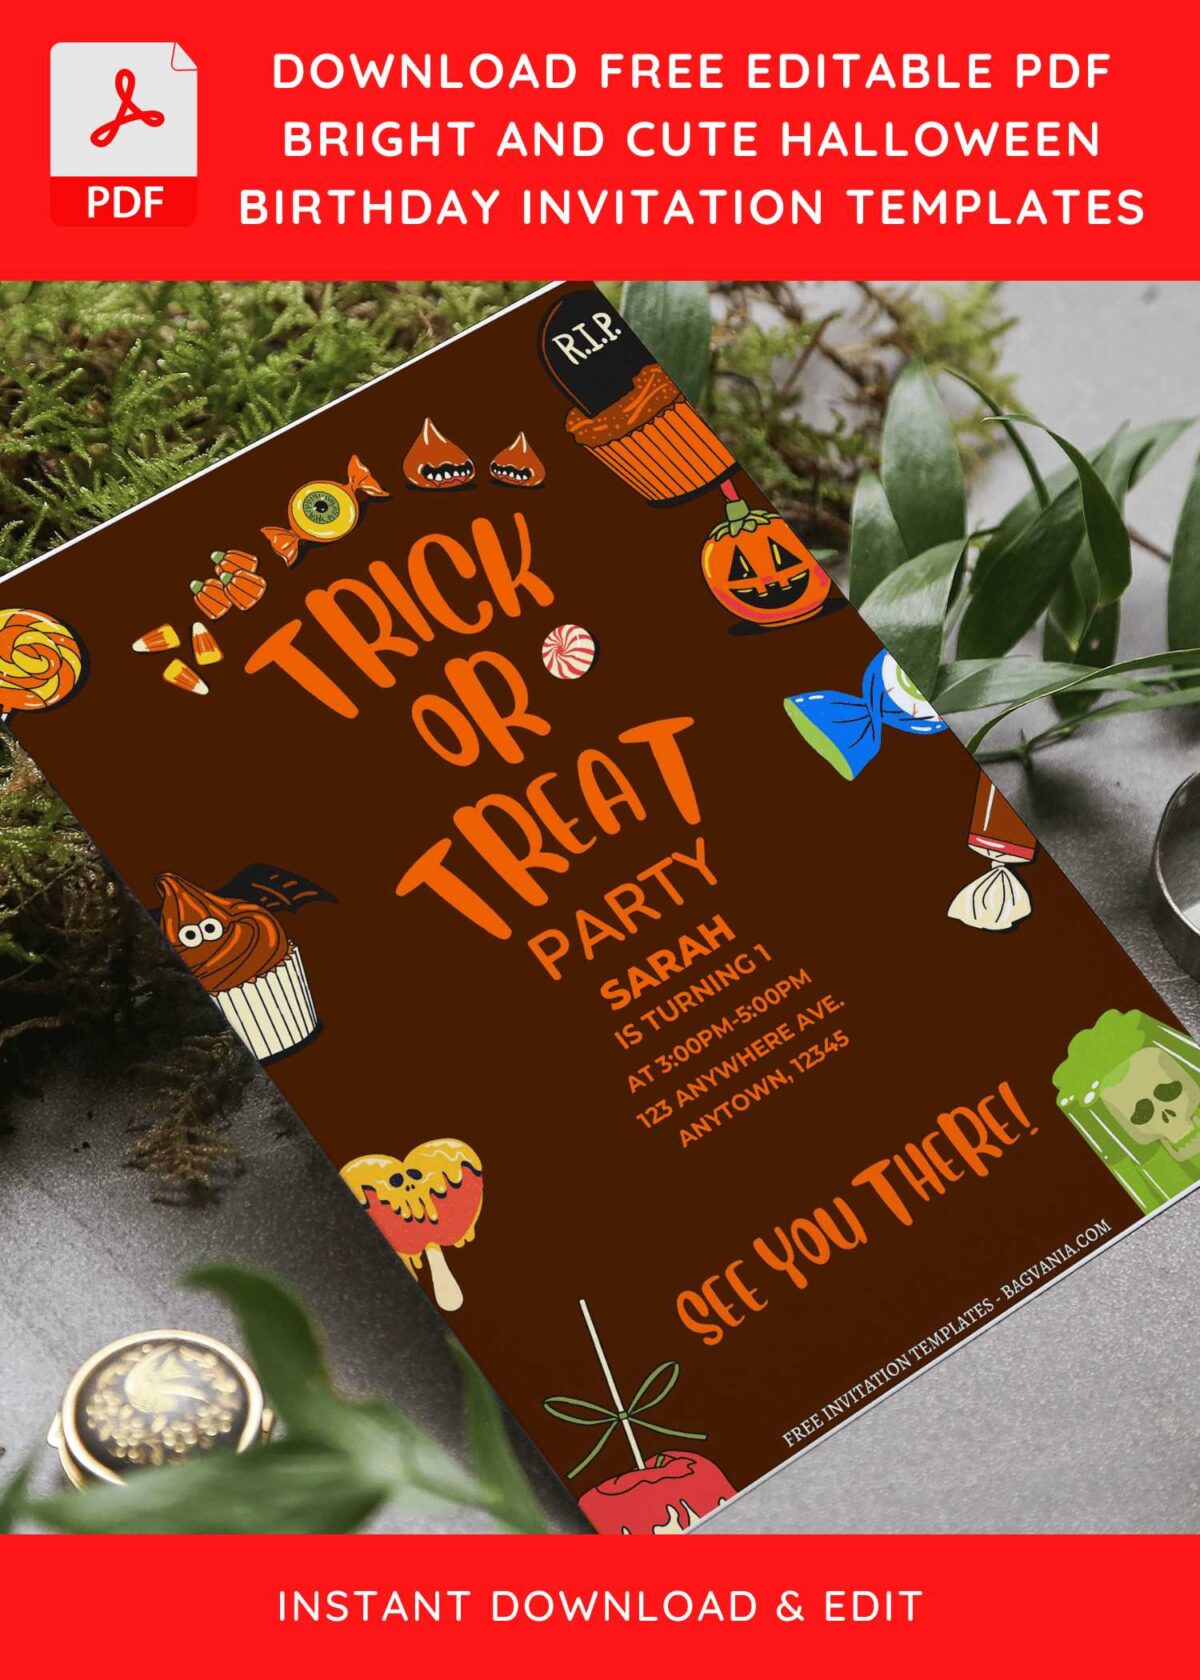 (Free Editable PDF) Halloween Trick Or Treat Birthday Invitation Templates F